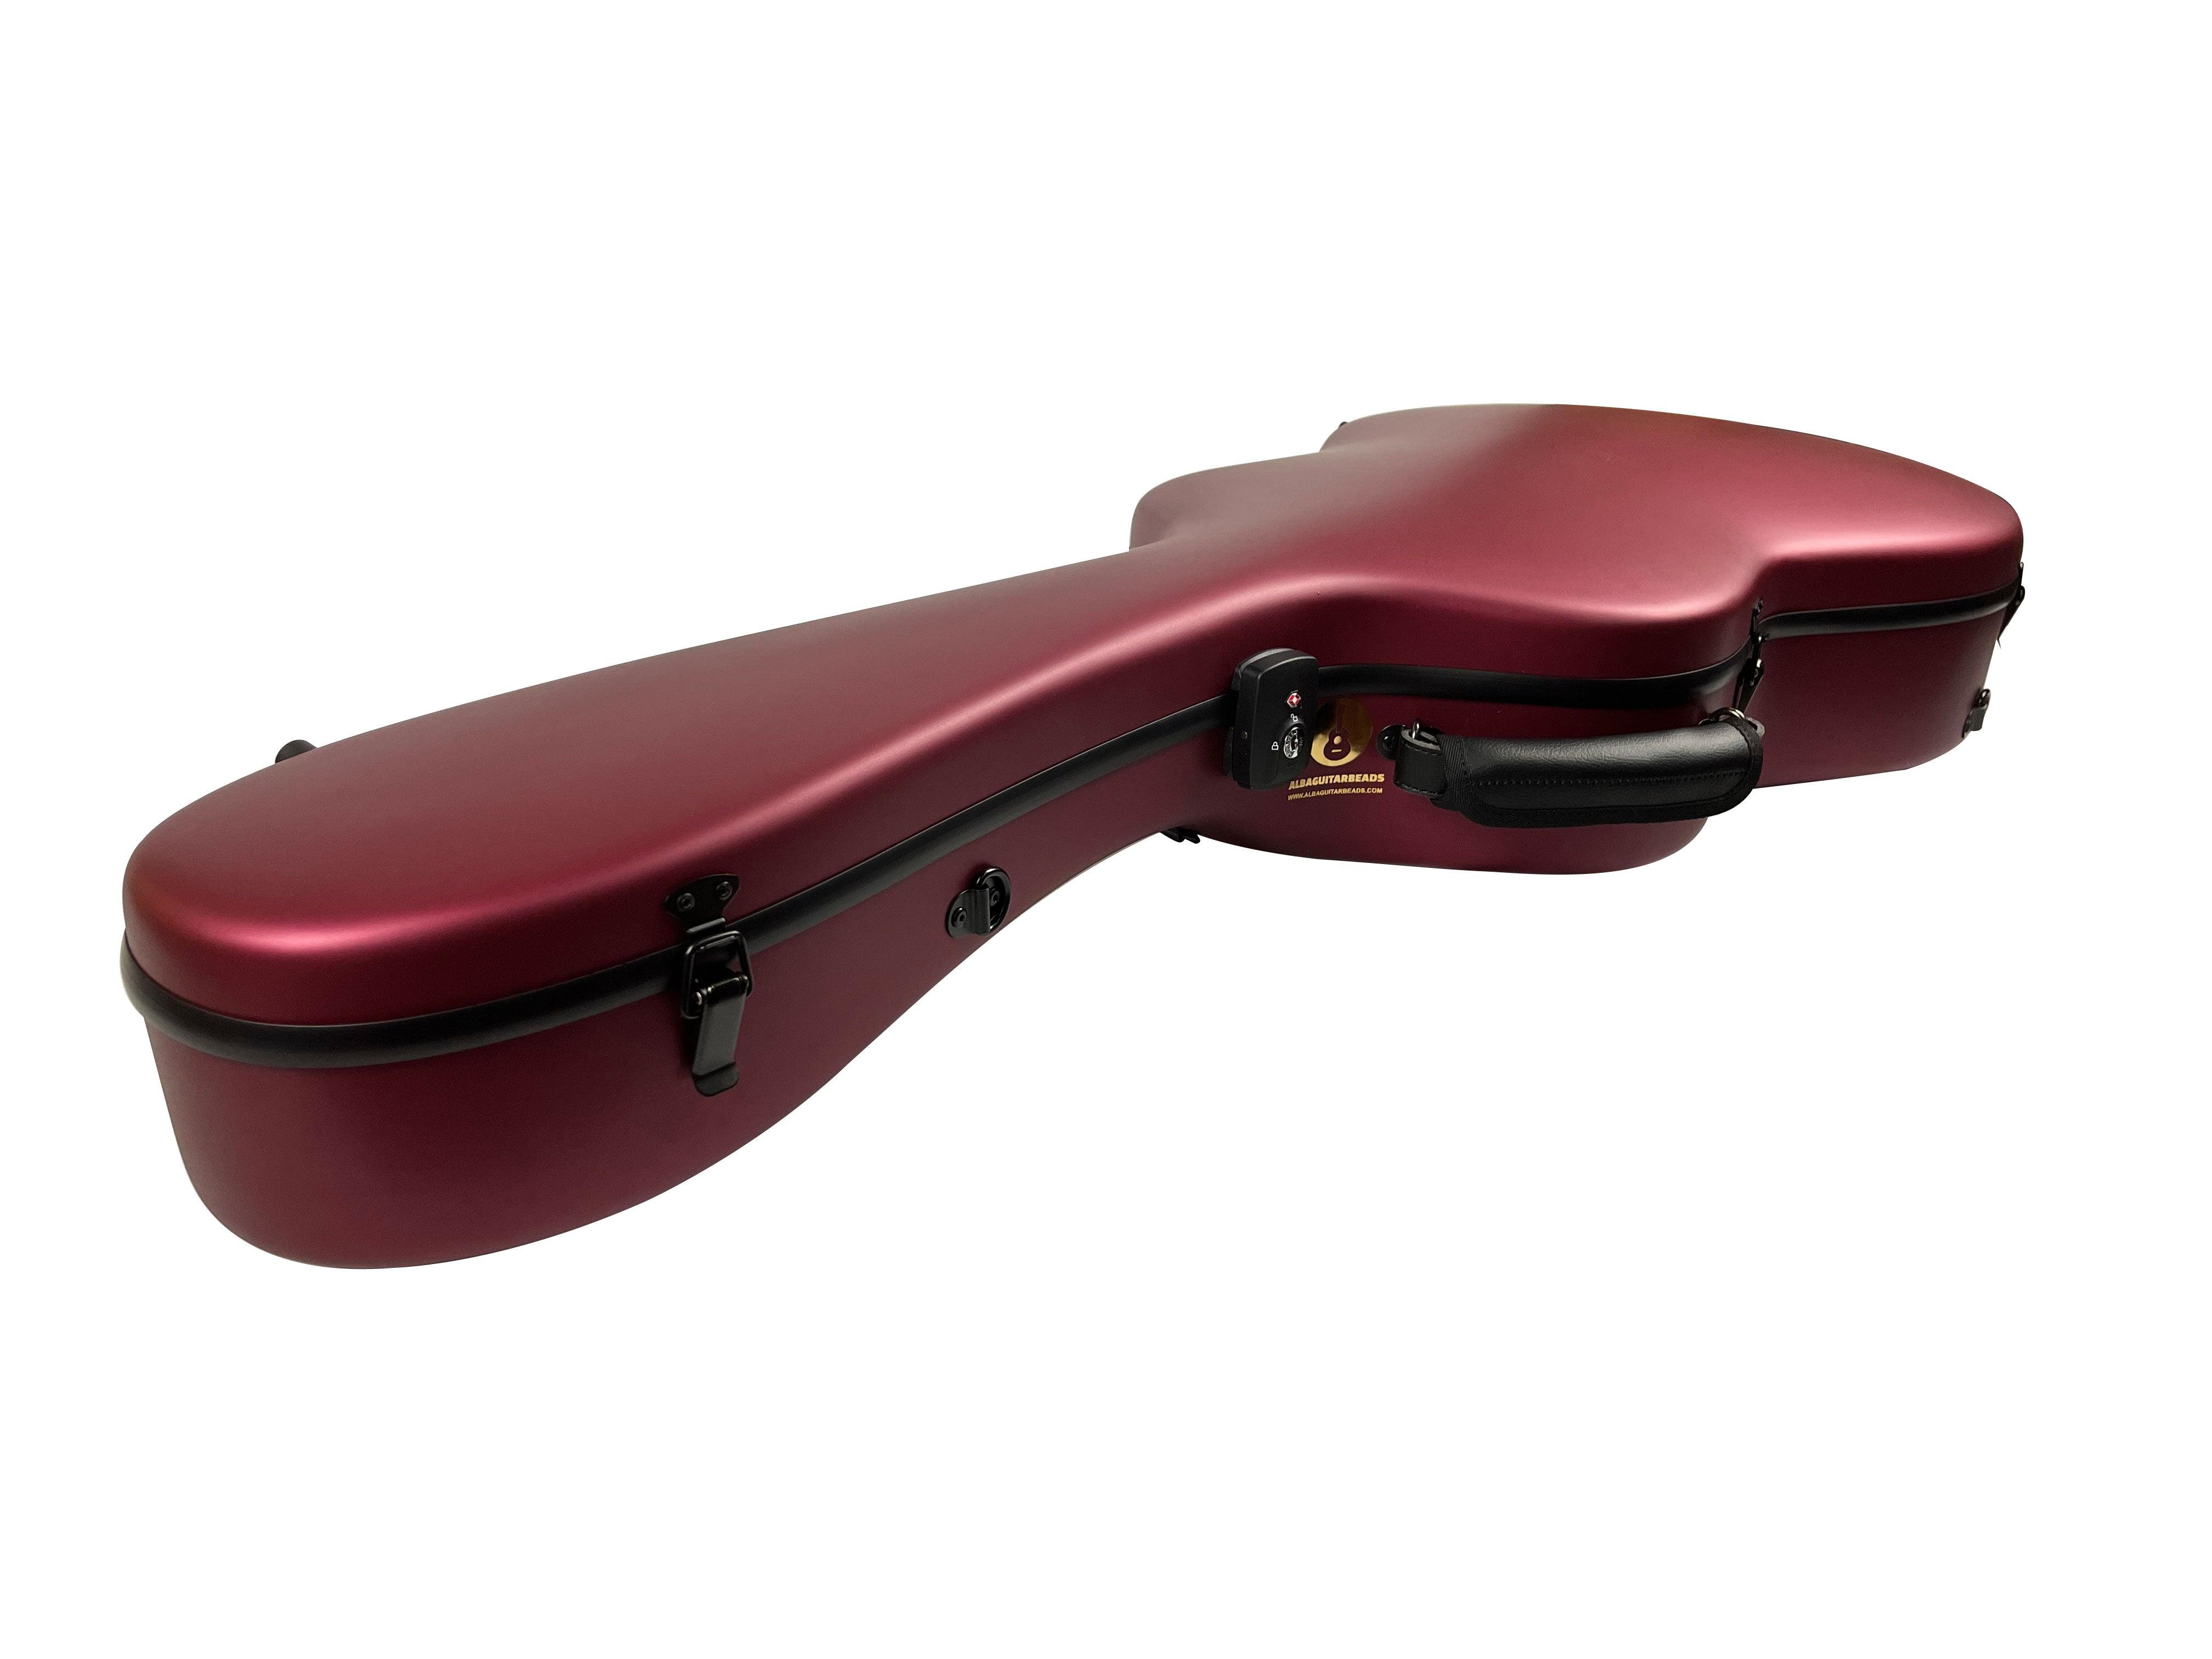 Carbon Case for Classical Guitar Acoustic, Flamenco guitar, Red Matte - mackazie